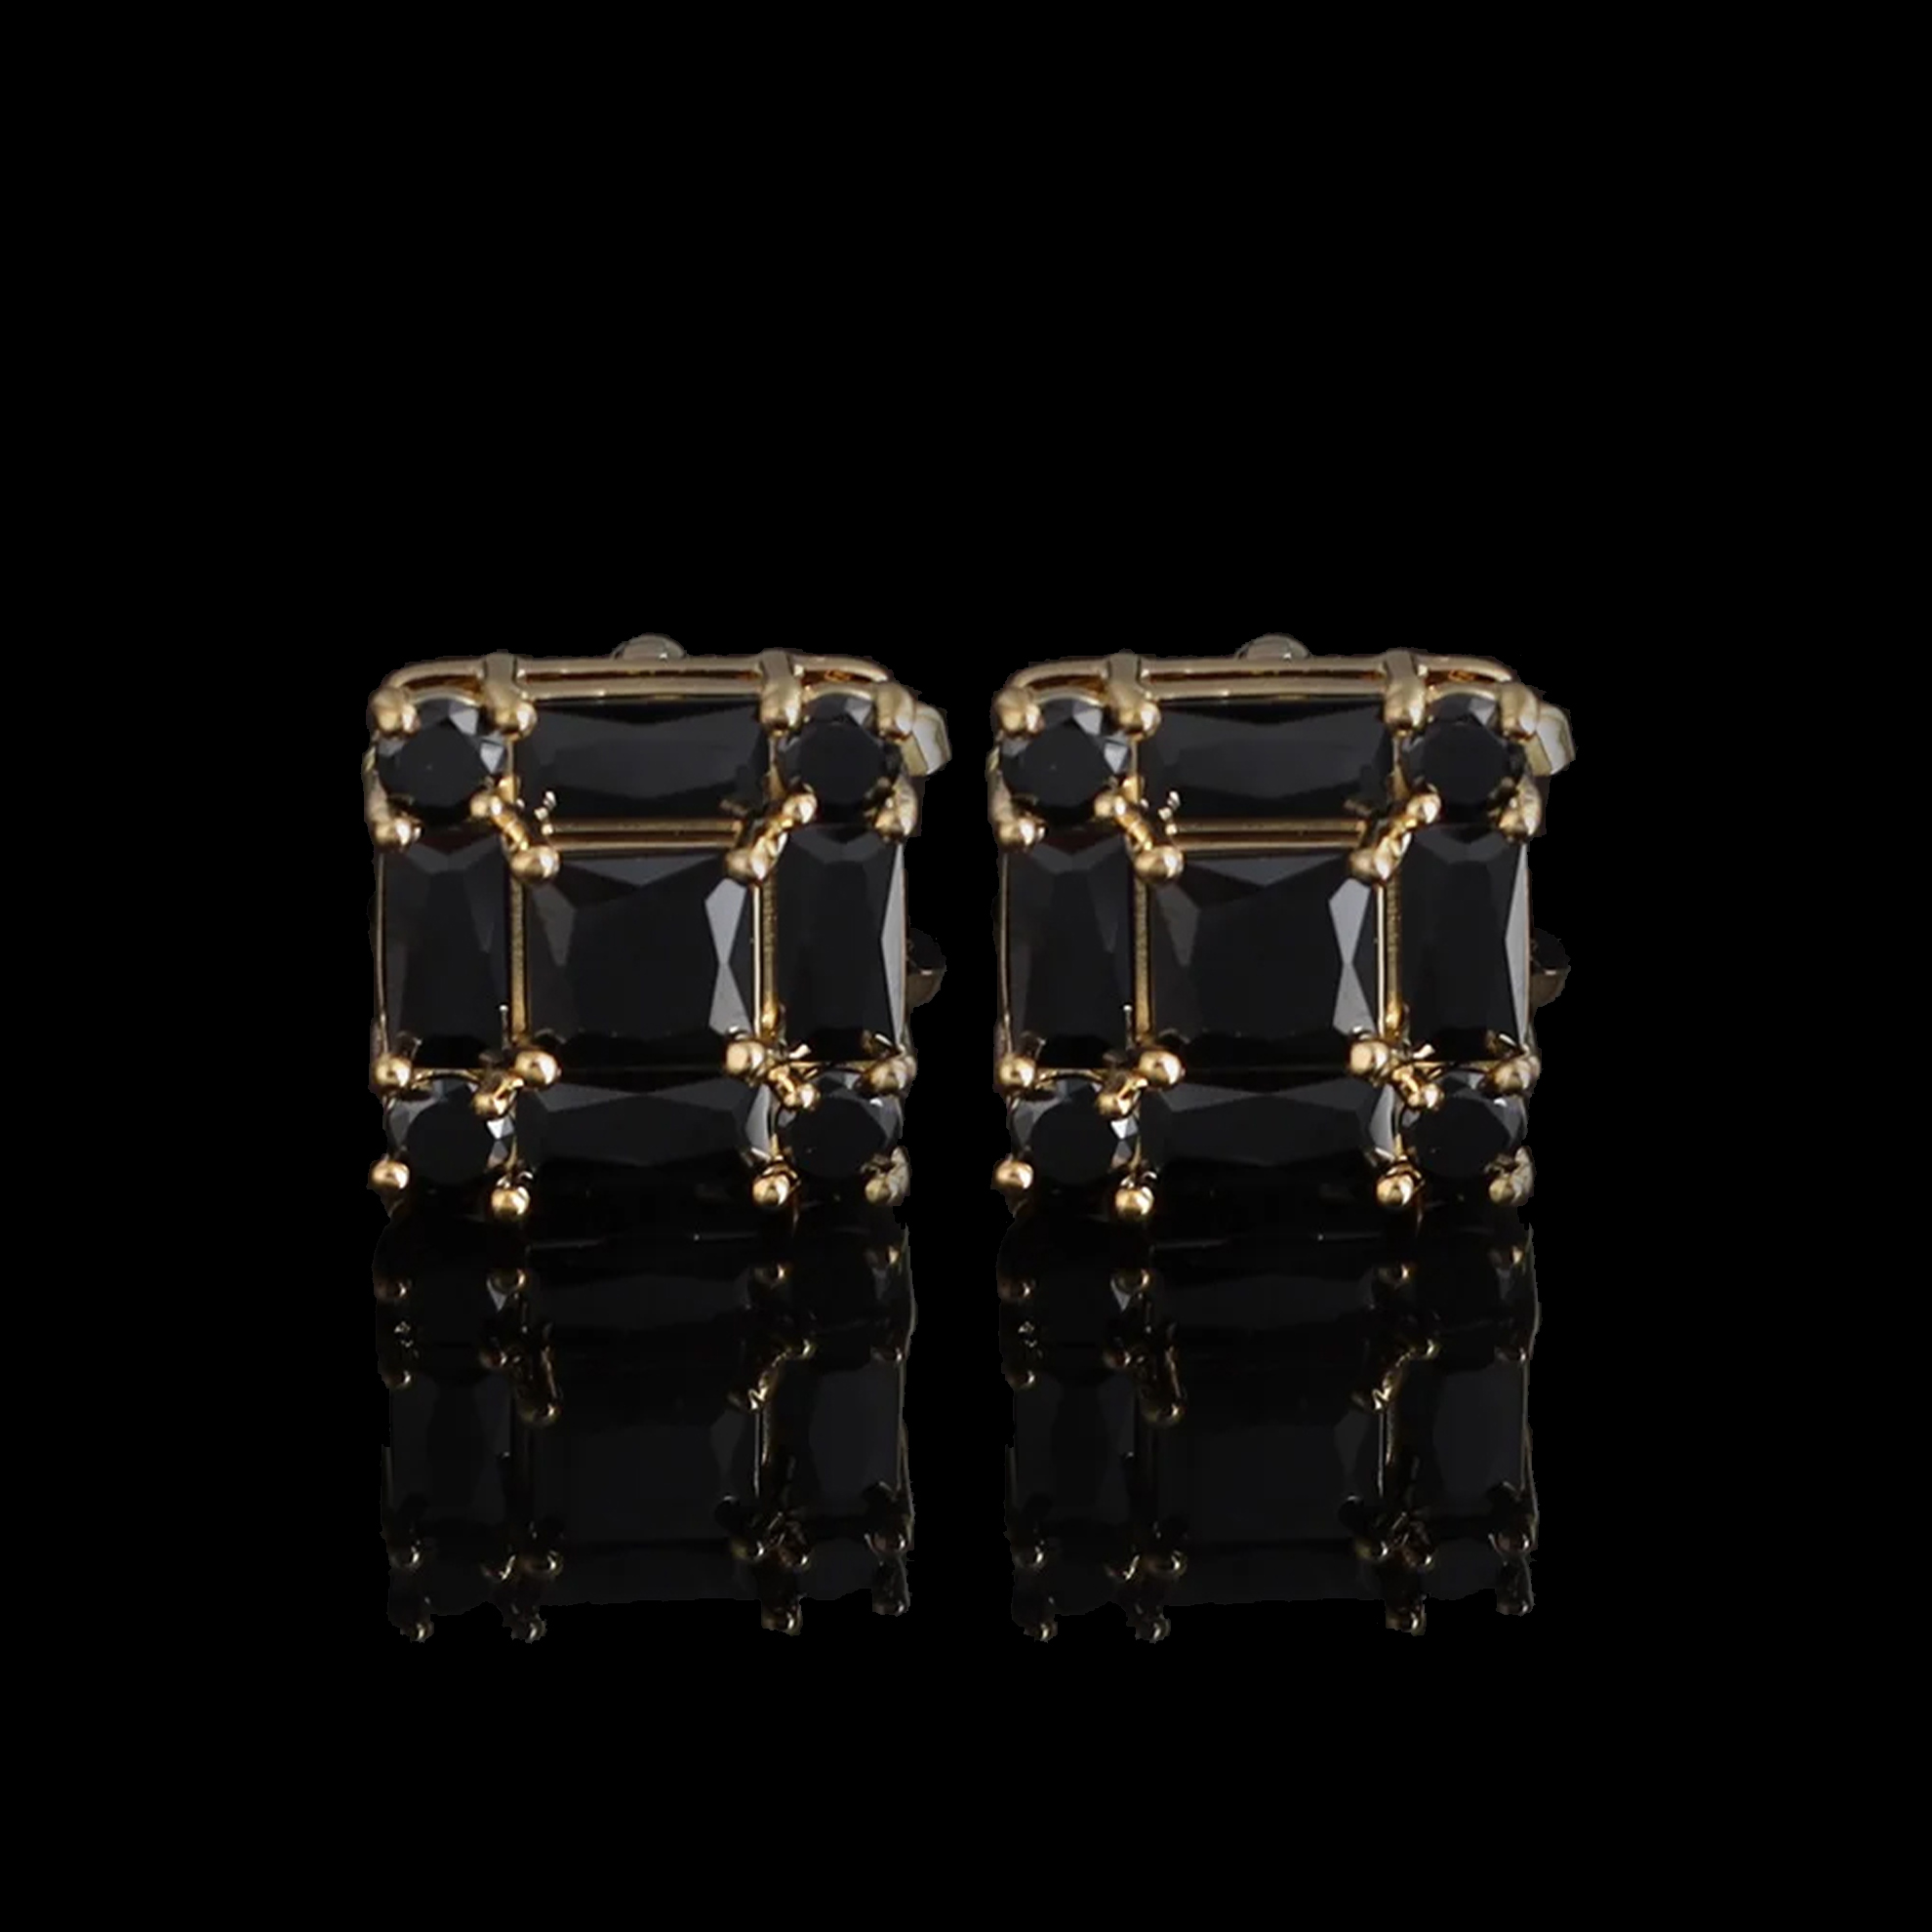 Cufflers Designer Black Square Stone Cufflinks Elegant Encrusted Design Free Gift Box – CU-3012-C